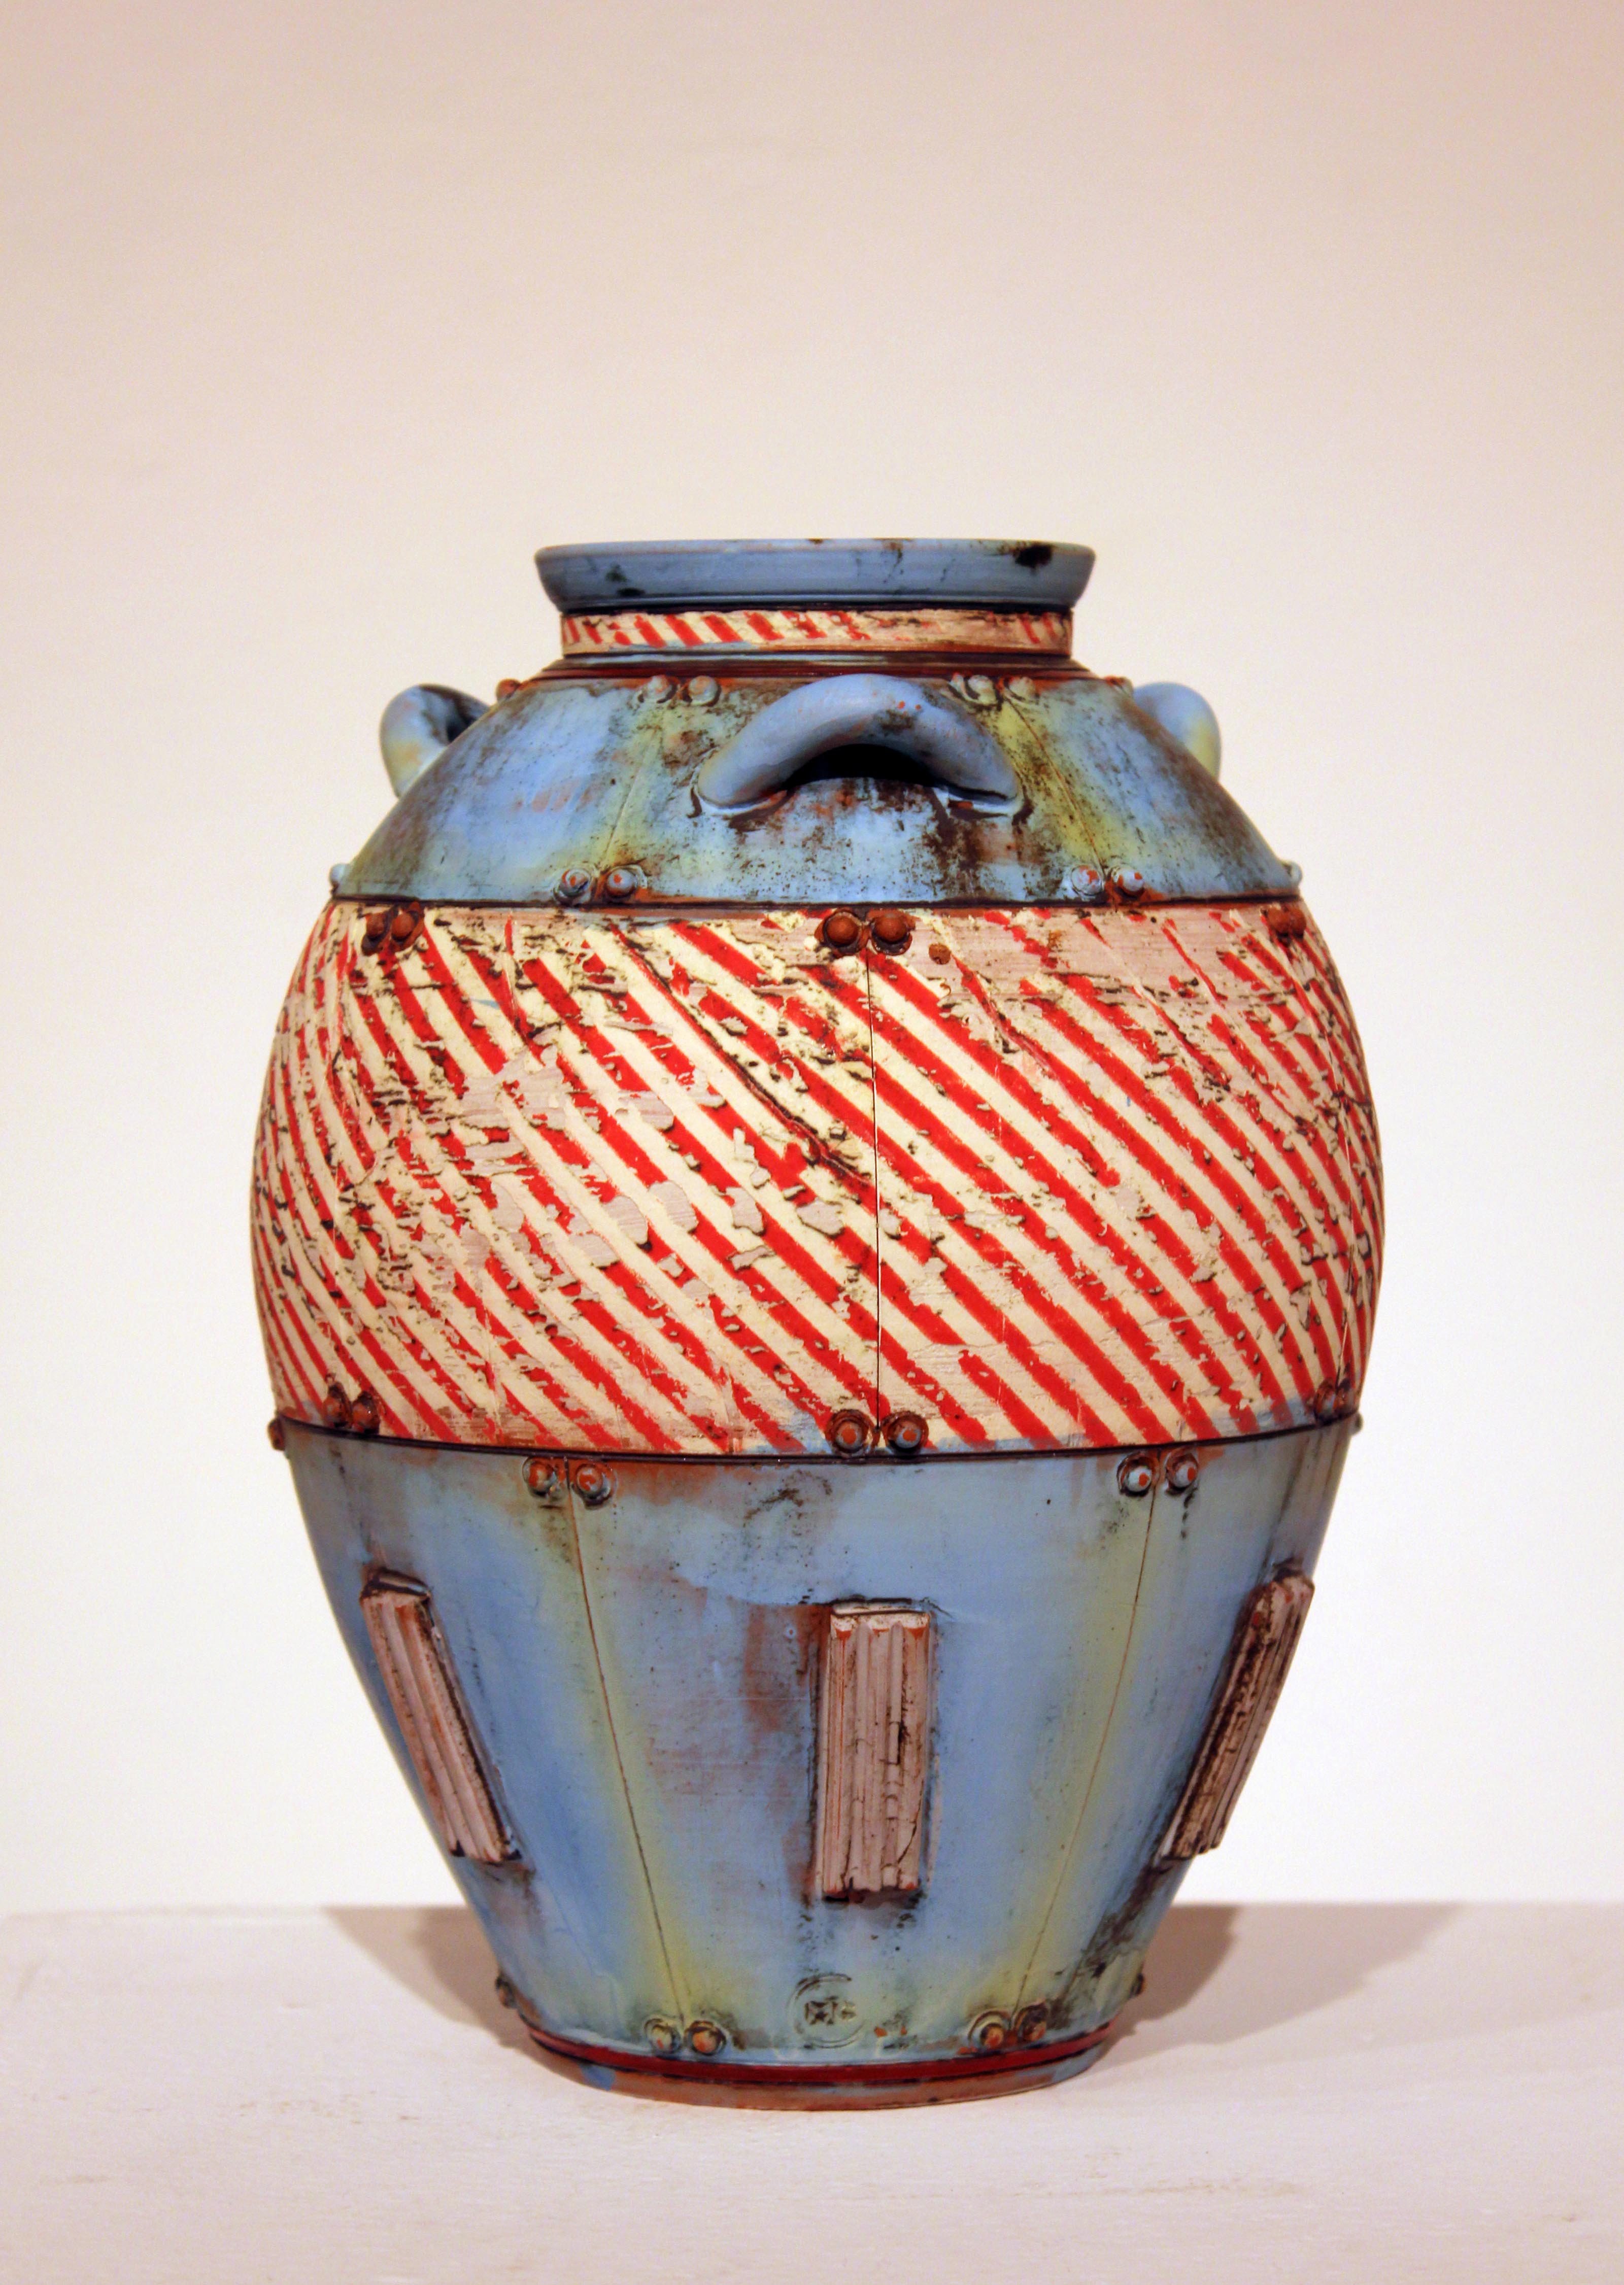 Mike Cinelli (Ceramicist)